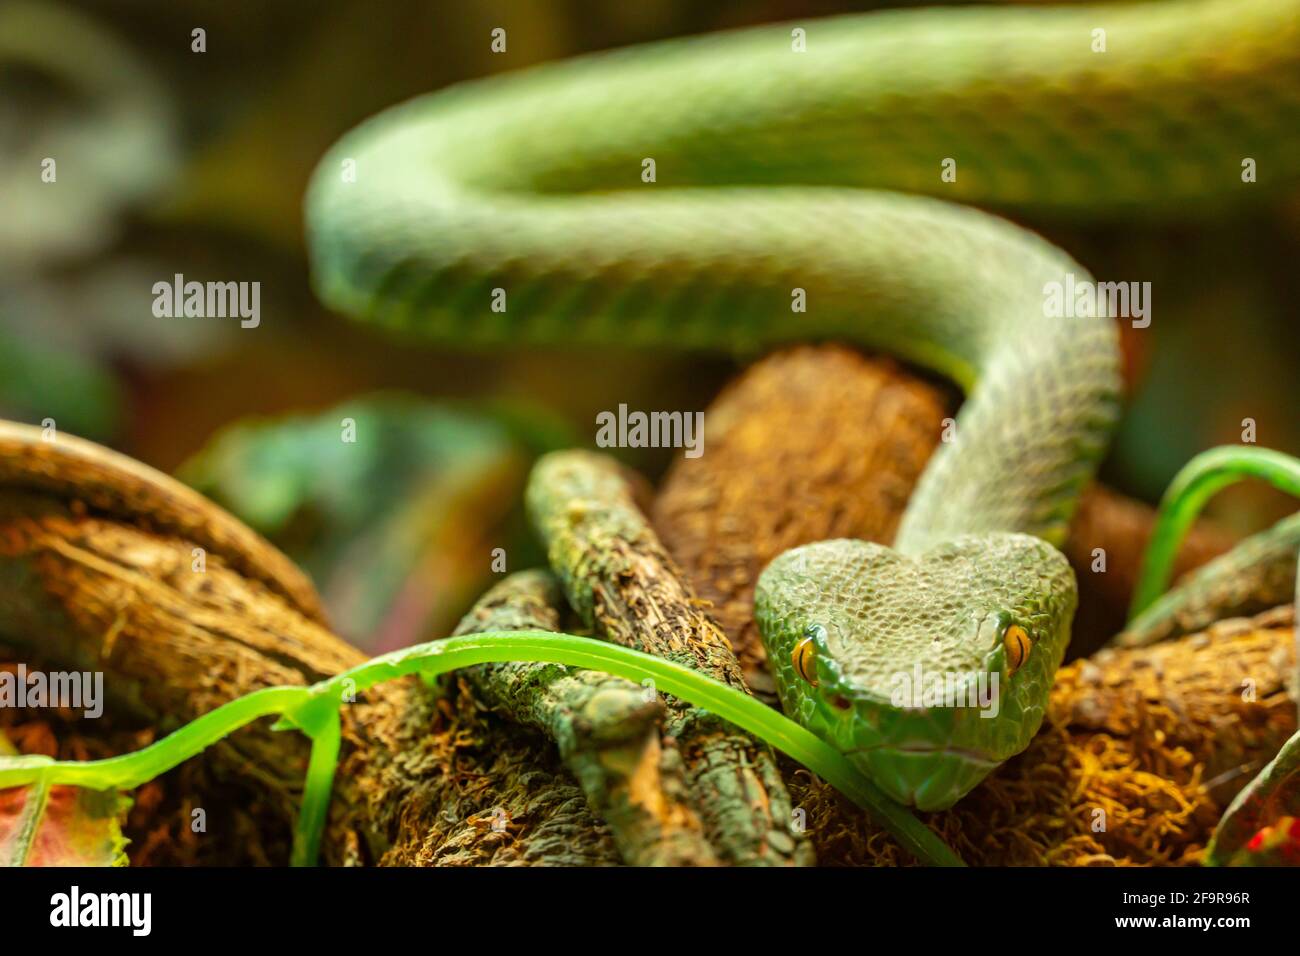 Asian palm pit viper Trimeresurus and yellow eyes crawling towards the camera, green poisonous snake Stock Photo